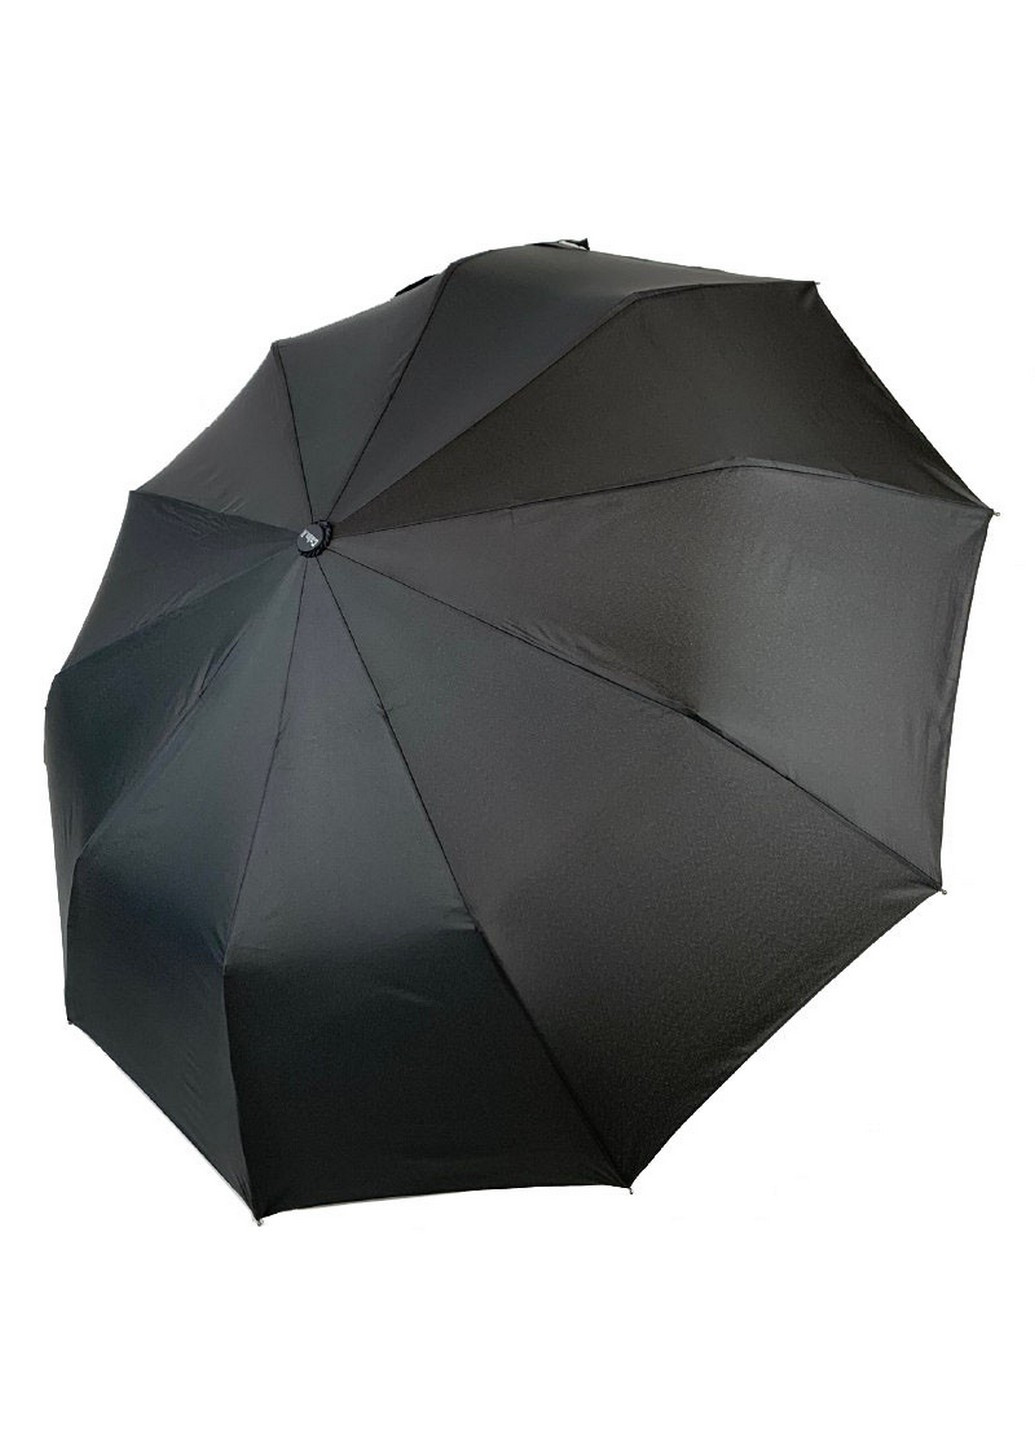 Мужской зонт полуавтомат 98 см Calm Rain (259213045)